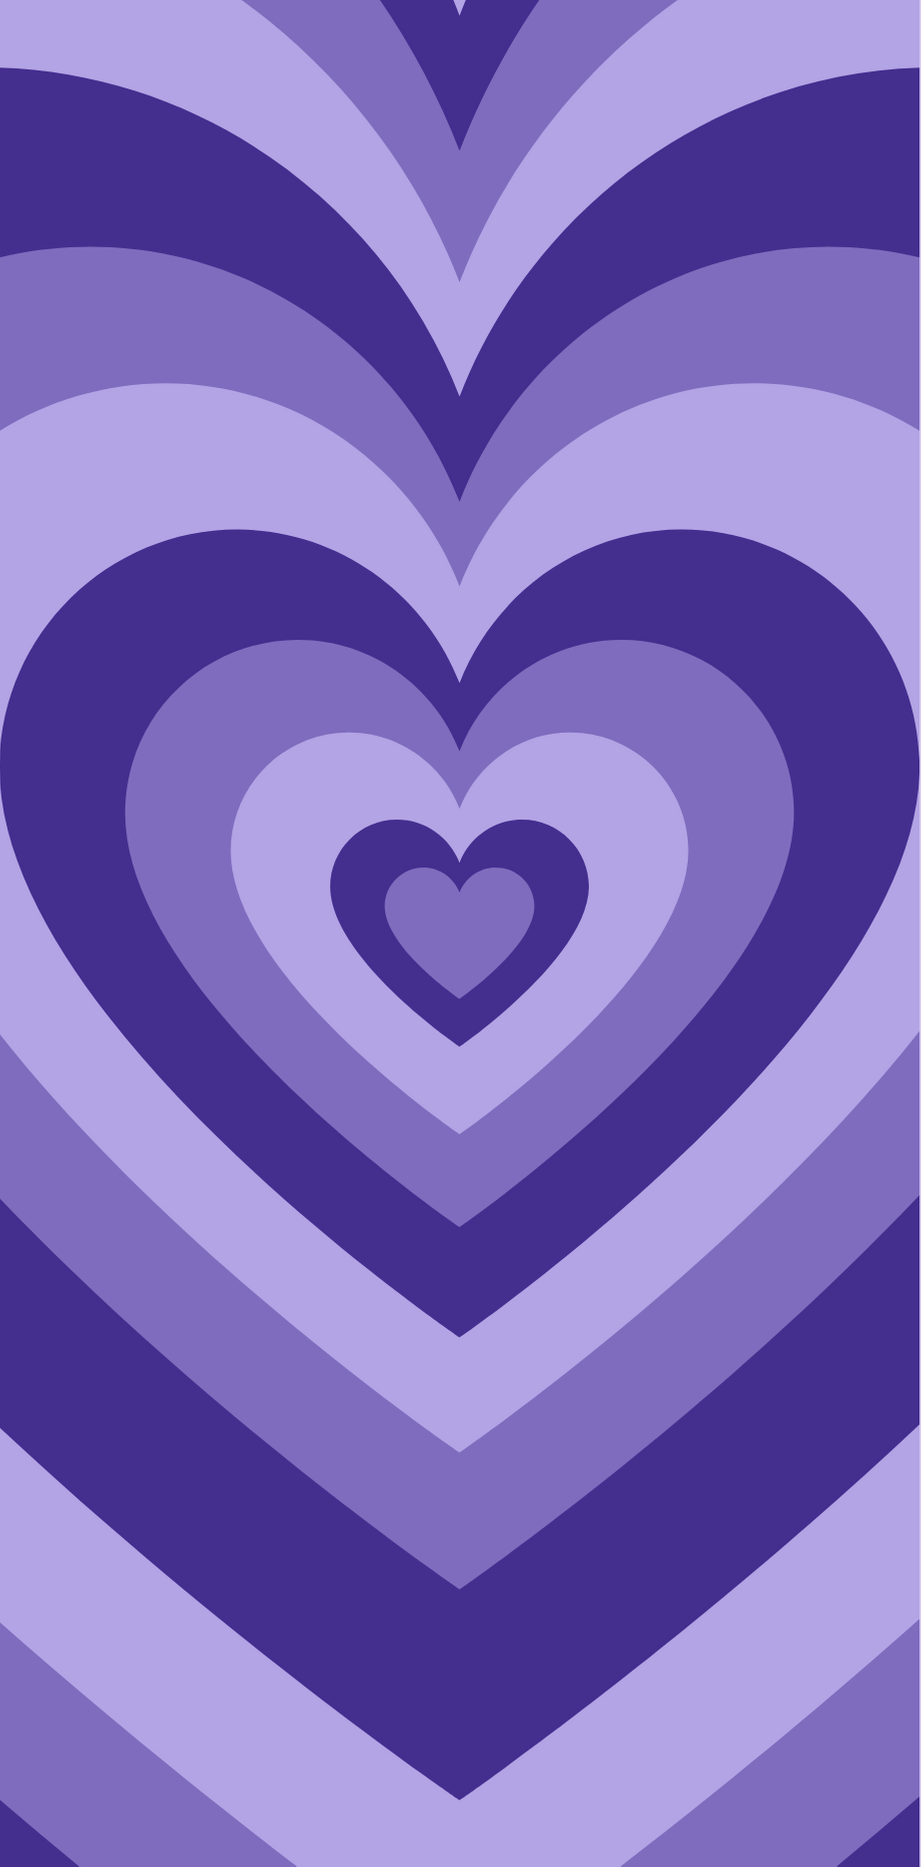 A purple and white striped heart pattern - Heart, Y2K